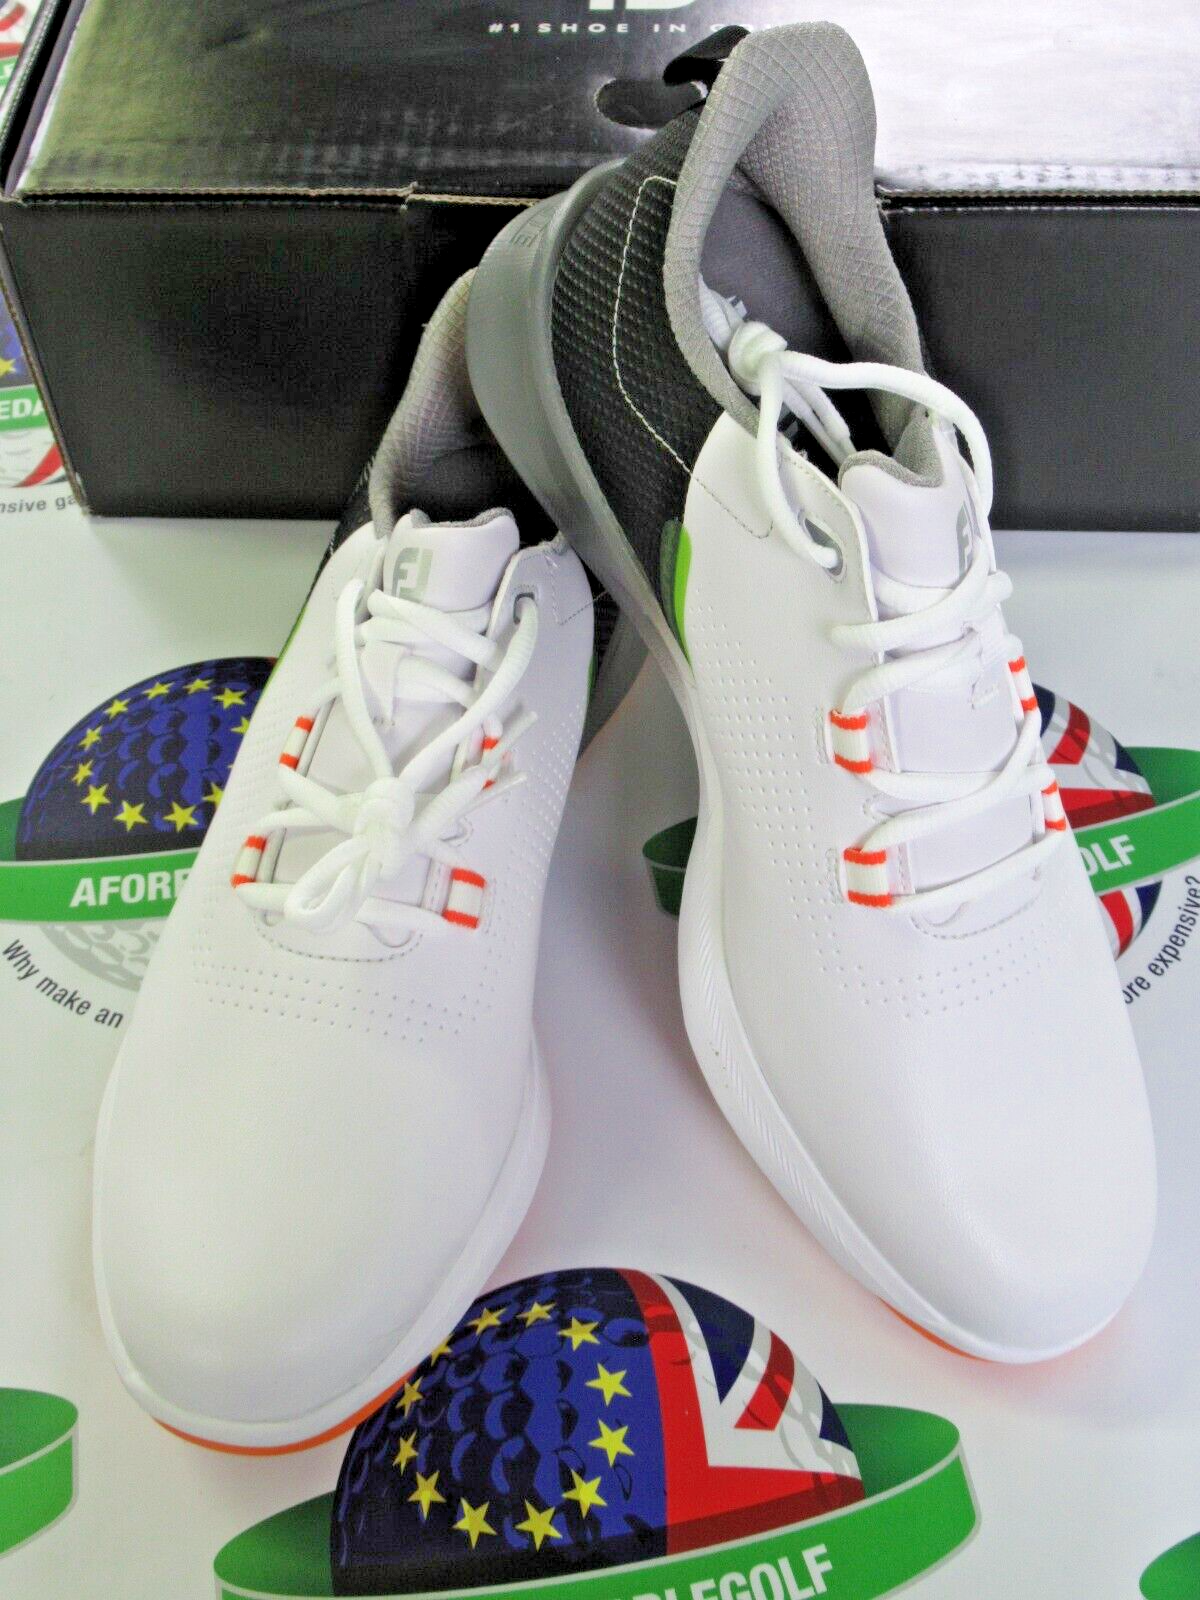 footjoy fj fuel waterproof golf shoes 55443k grey/white uk size 9 medium